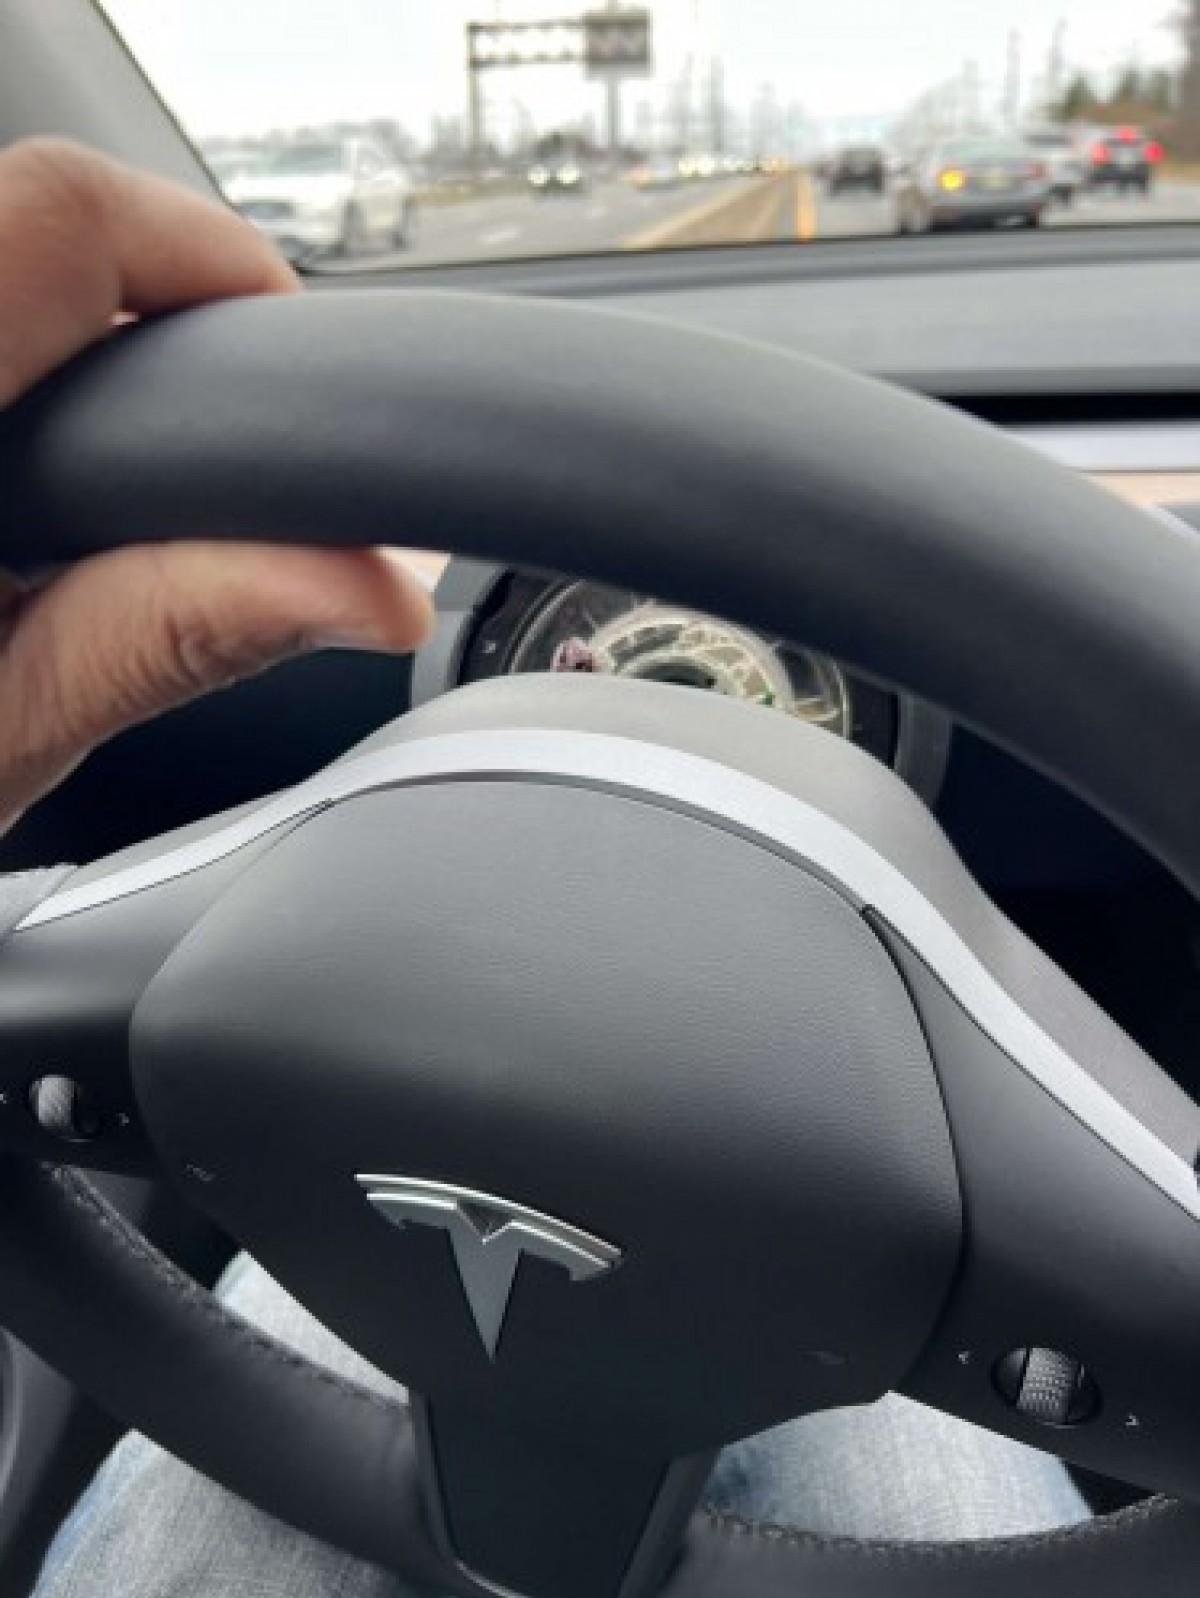 Sometimes Tesla feels as if the wheels were off...